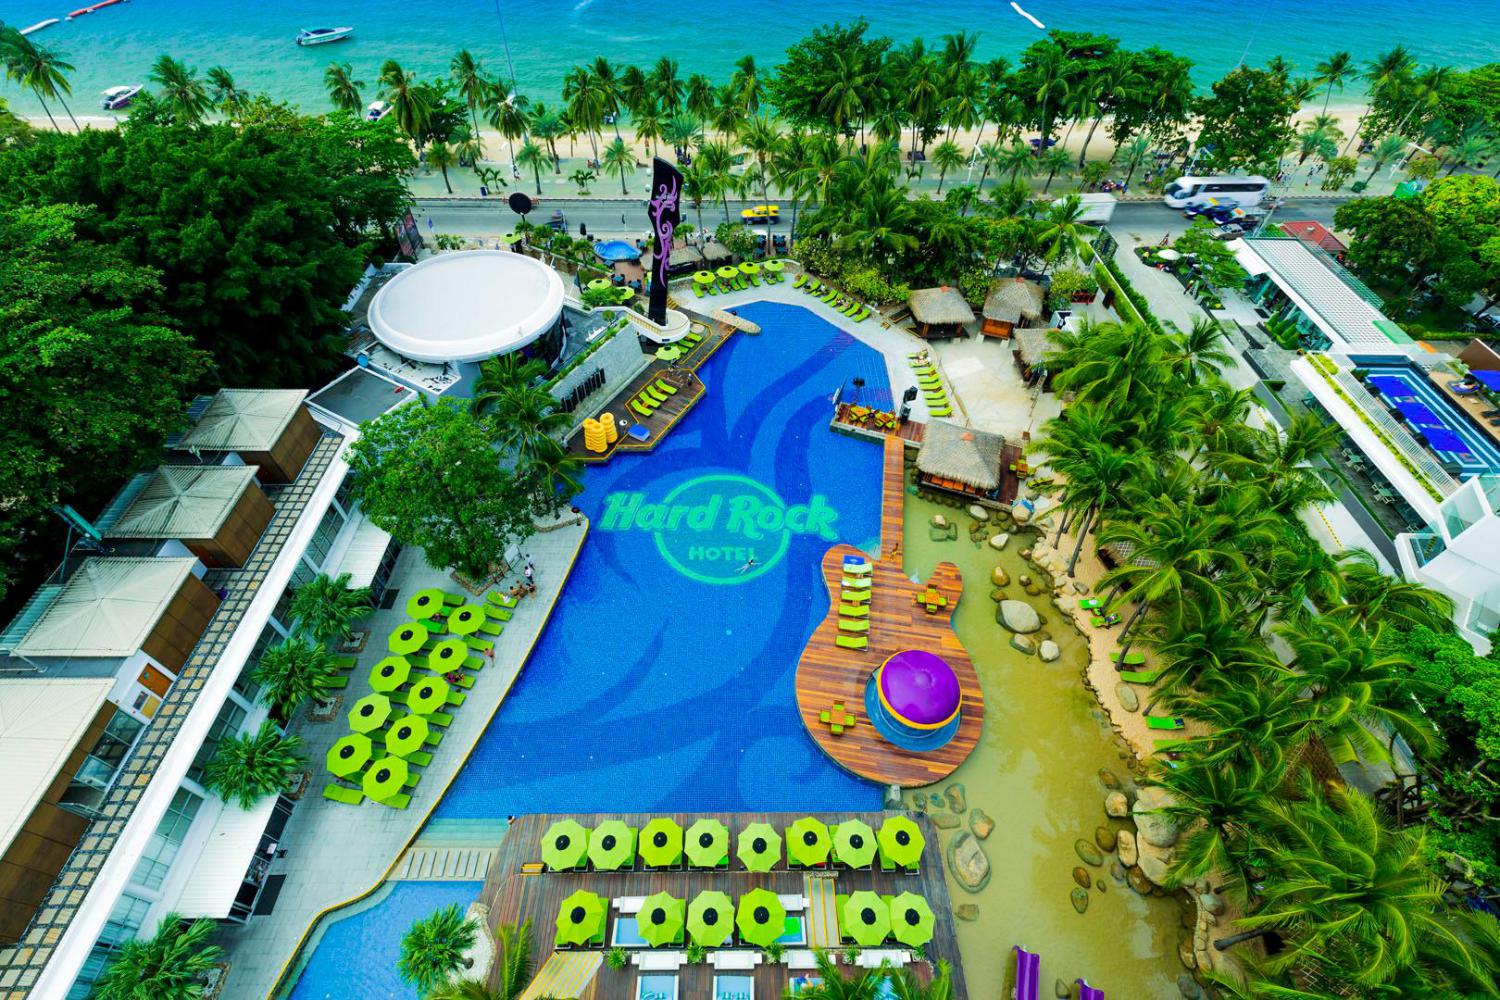 Hard Rock Hotel Pattaya - Image 0